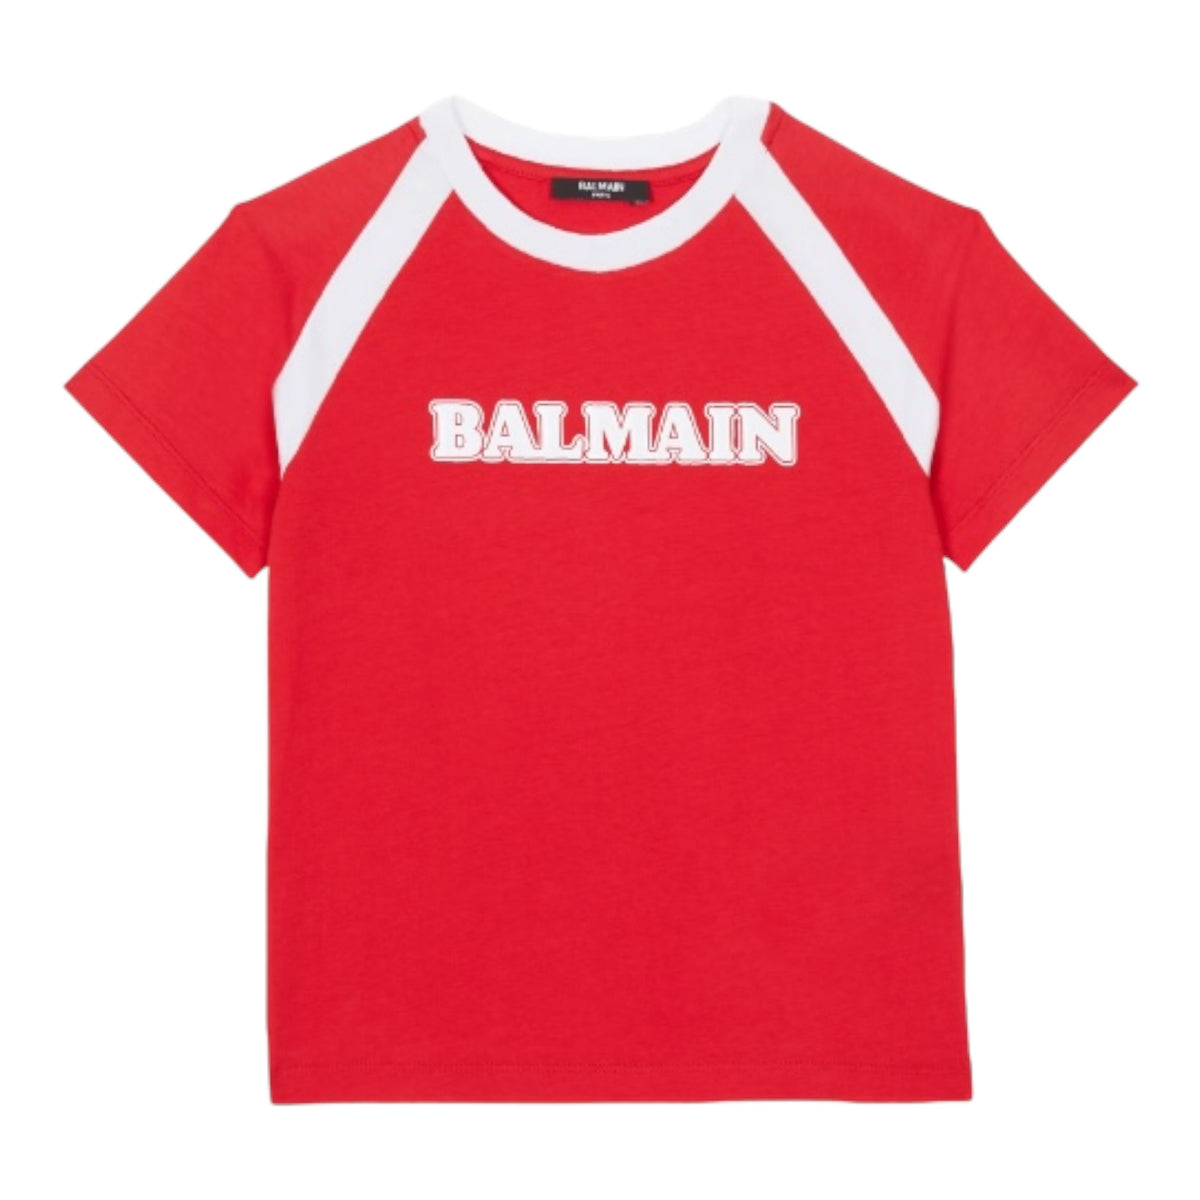 Balmain Kids Retro Printed Jersey T-Shirt